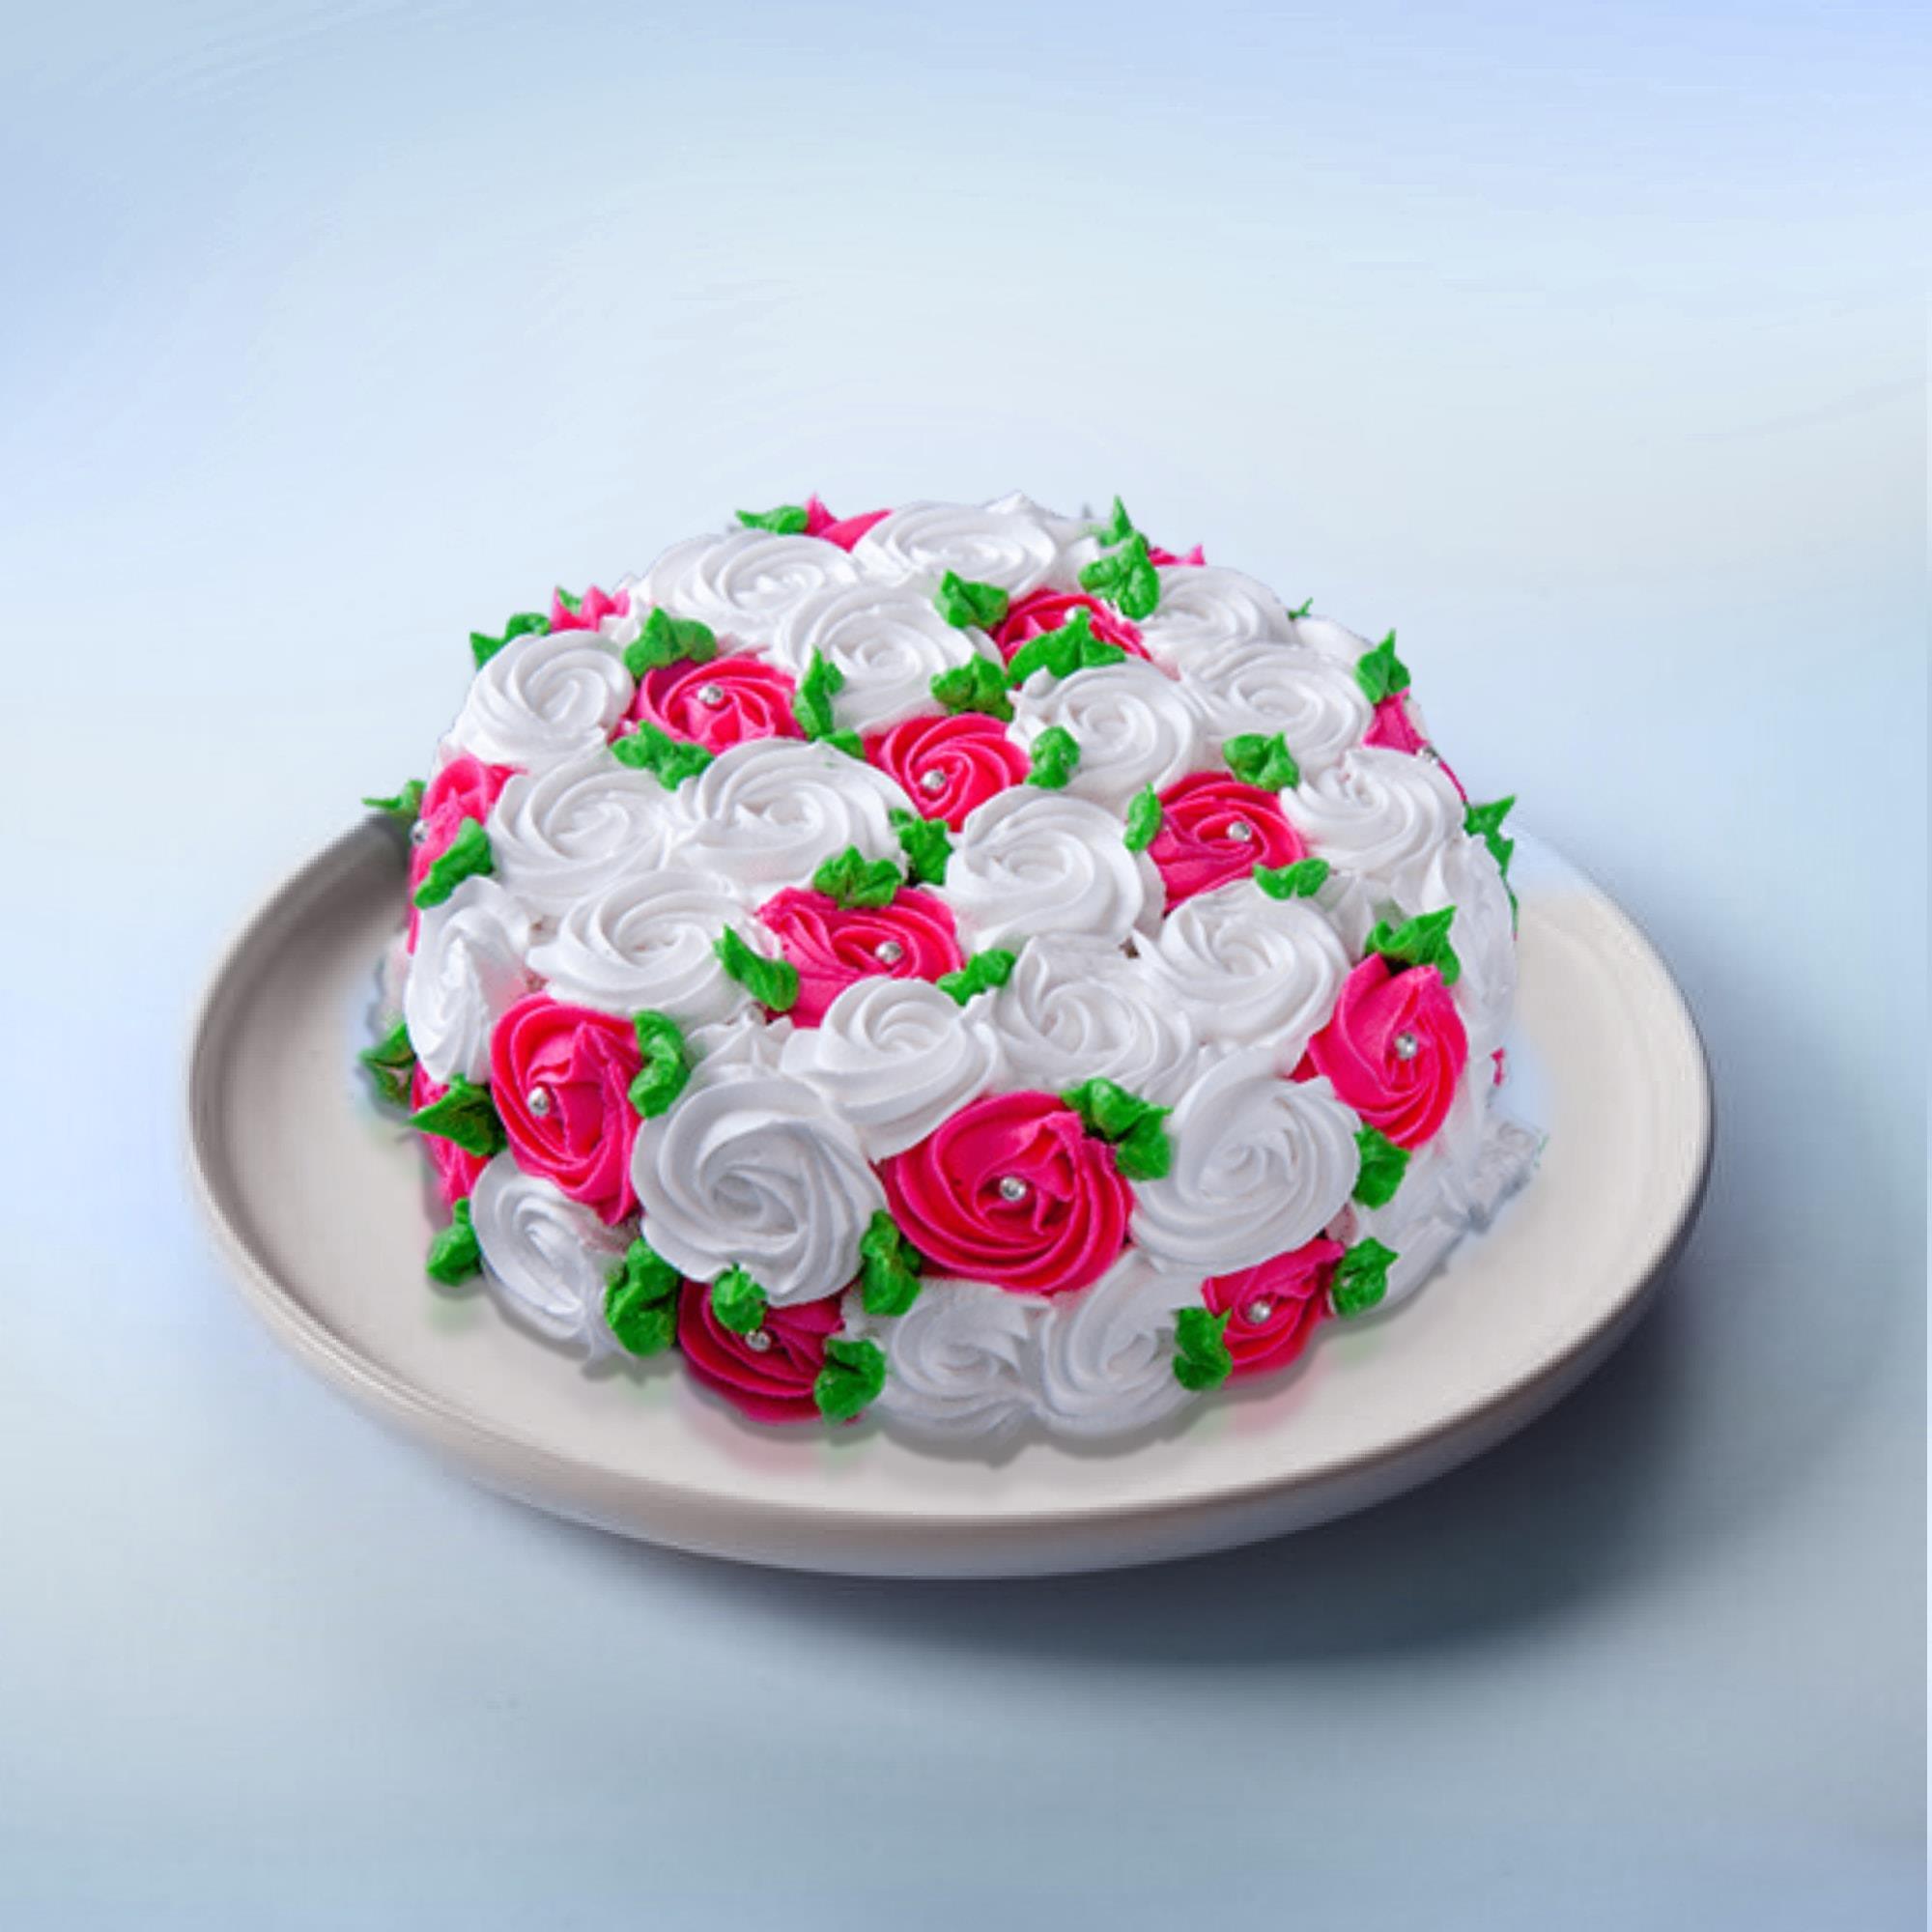 Cake Day ,Nagpur Call - 9326154600 #customizedcakes #themecake #momcake  #photocake | Instagram